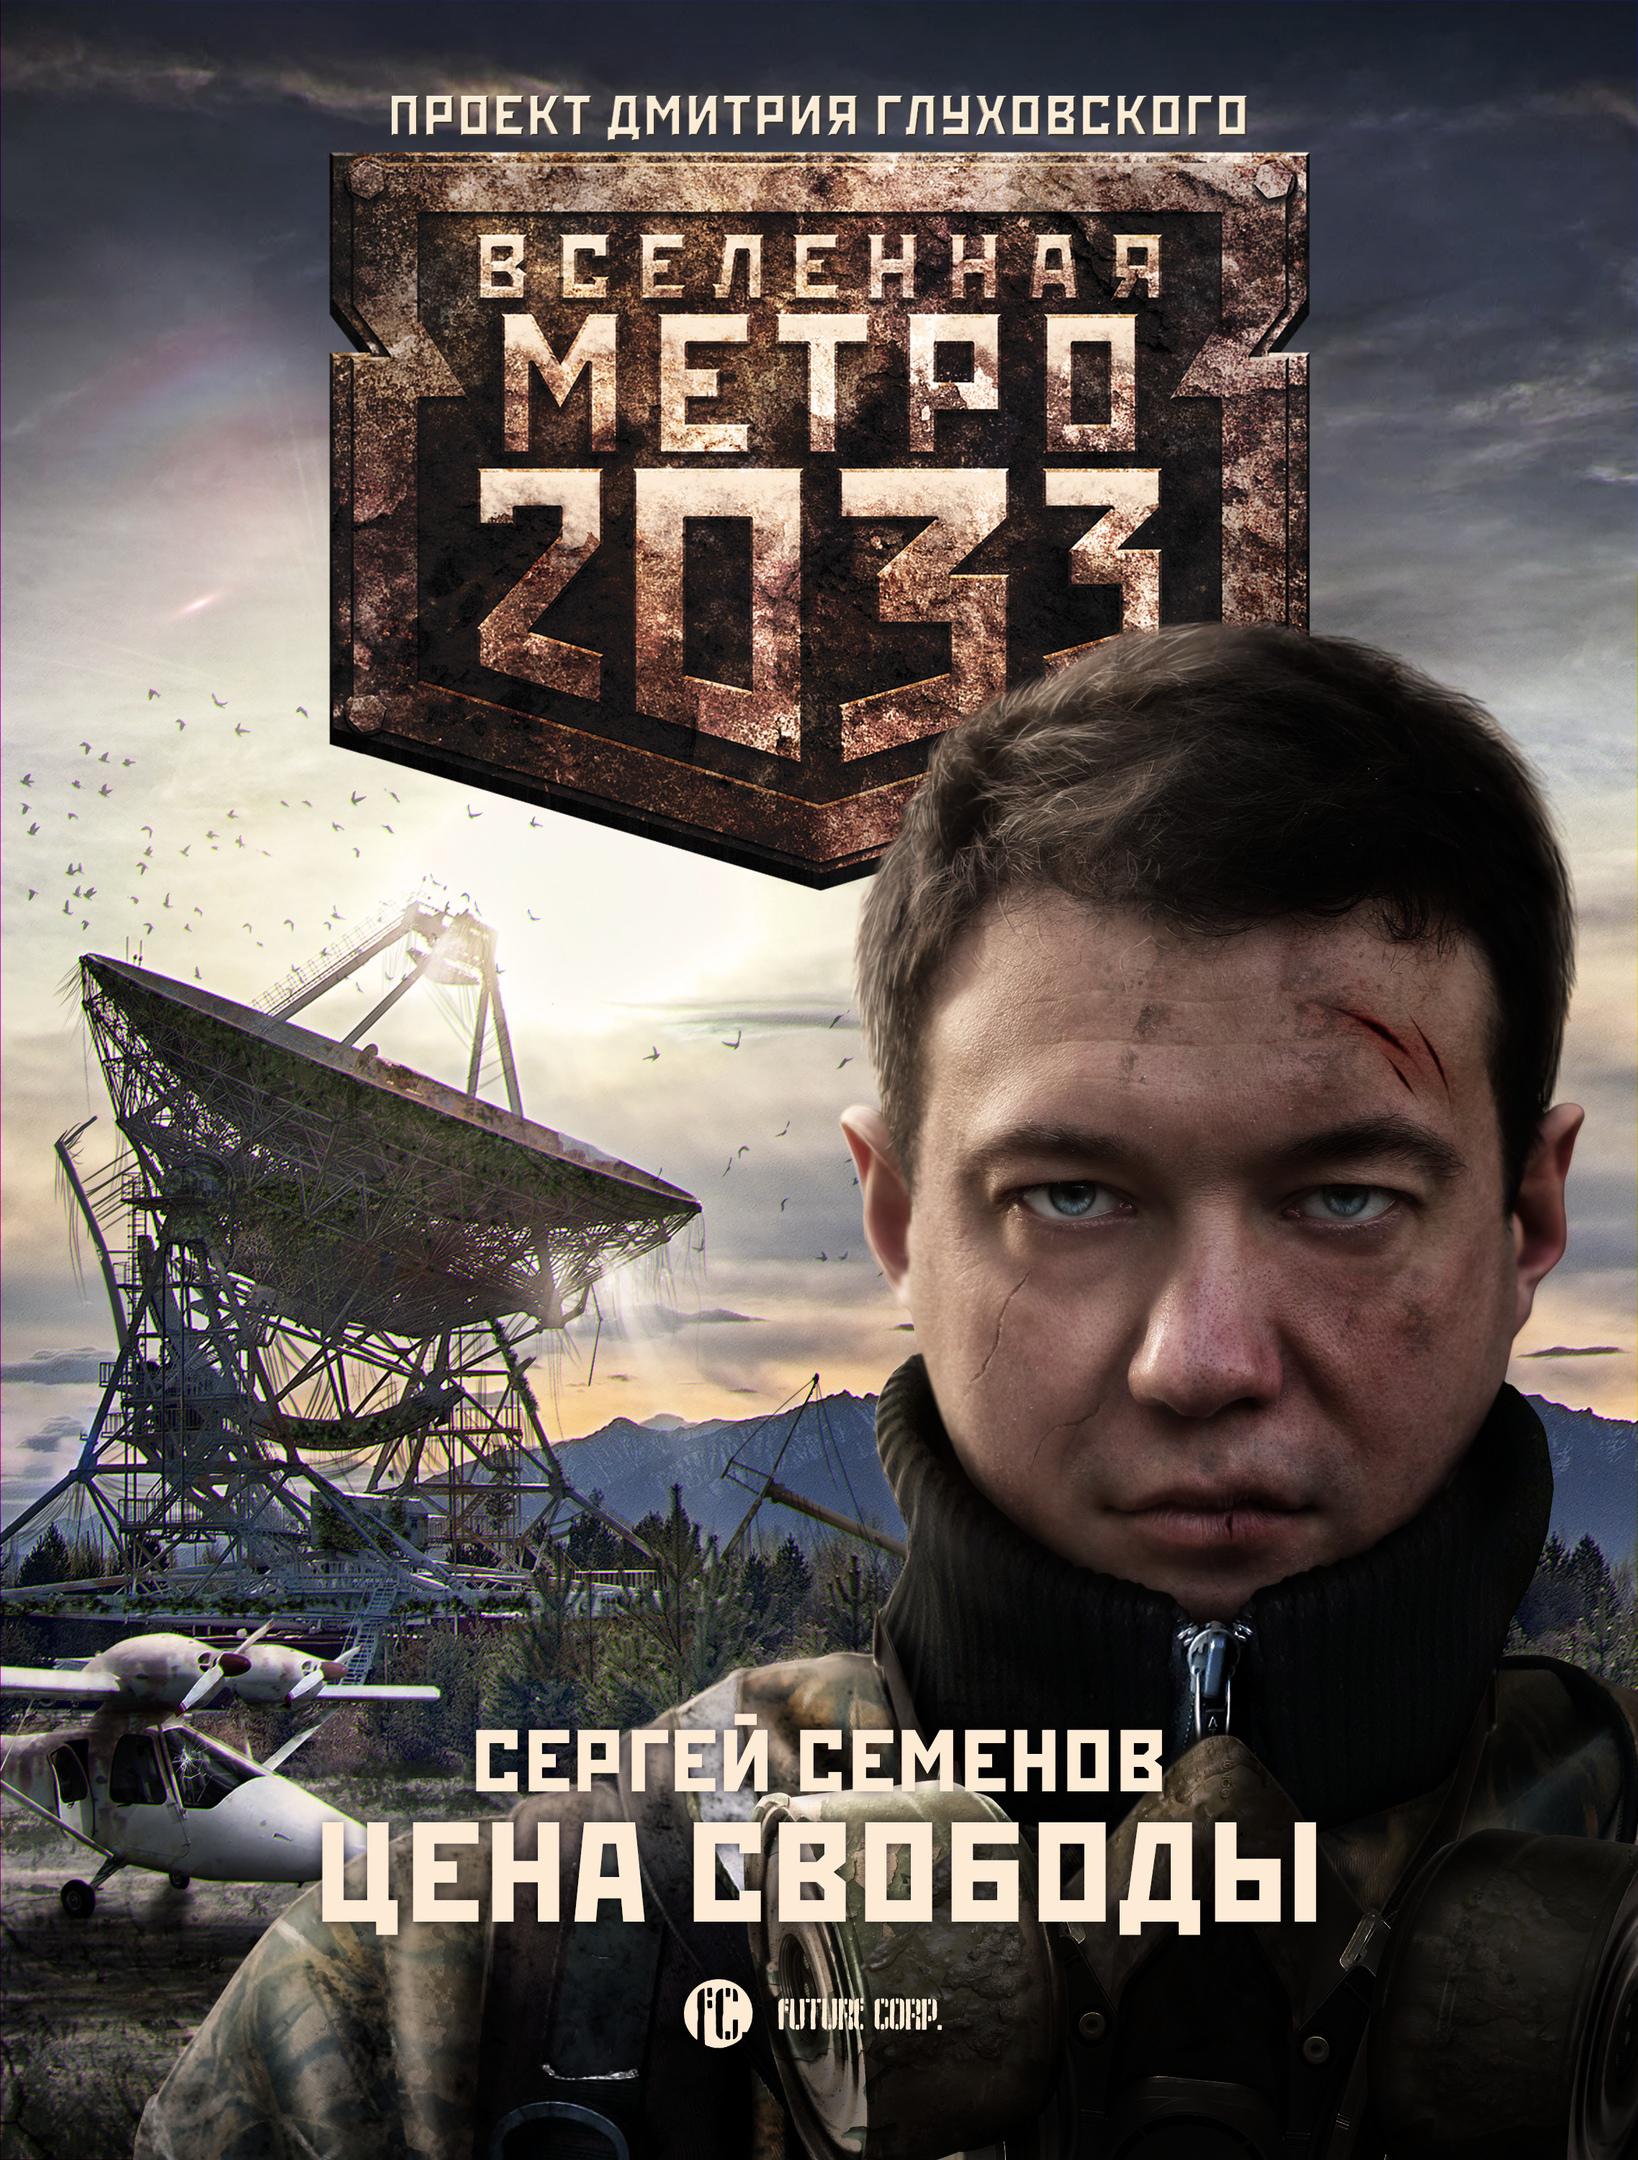 Вадим Карпук, Обложка книги из серии Метро 2033